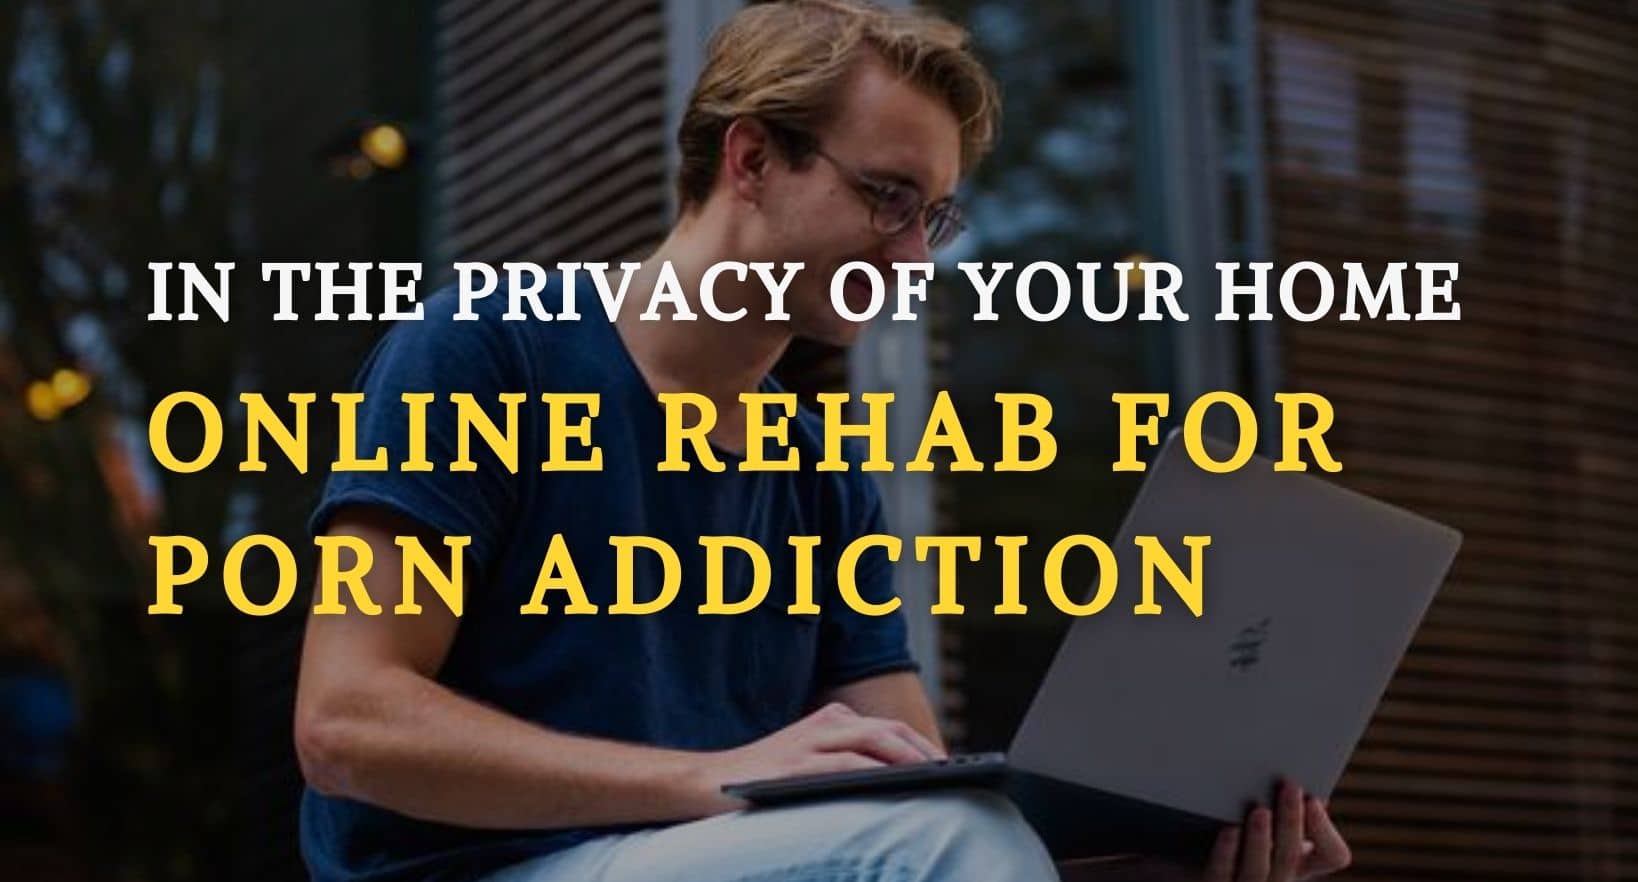 A person is receiving porn addiction treatment through an Online Rehab program.